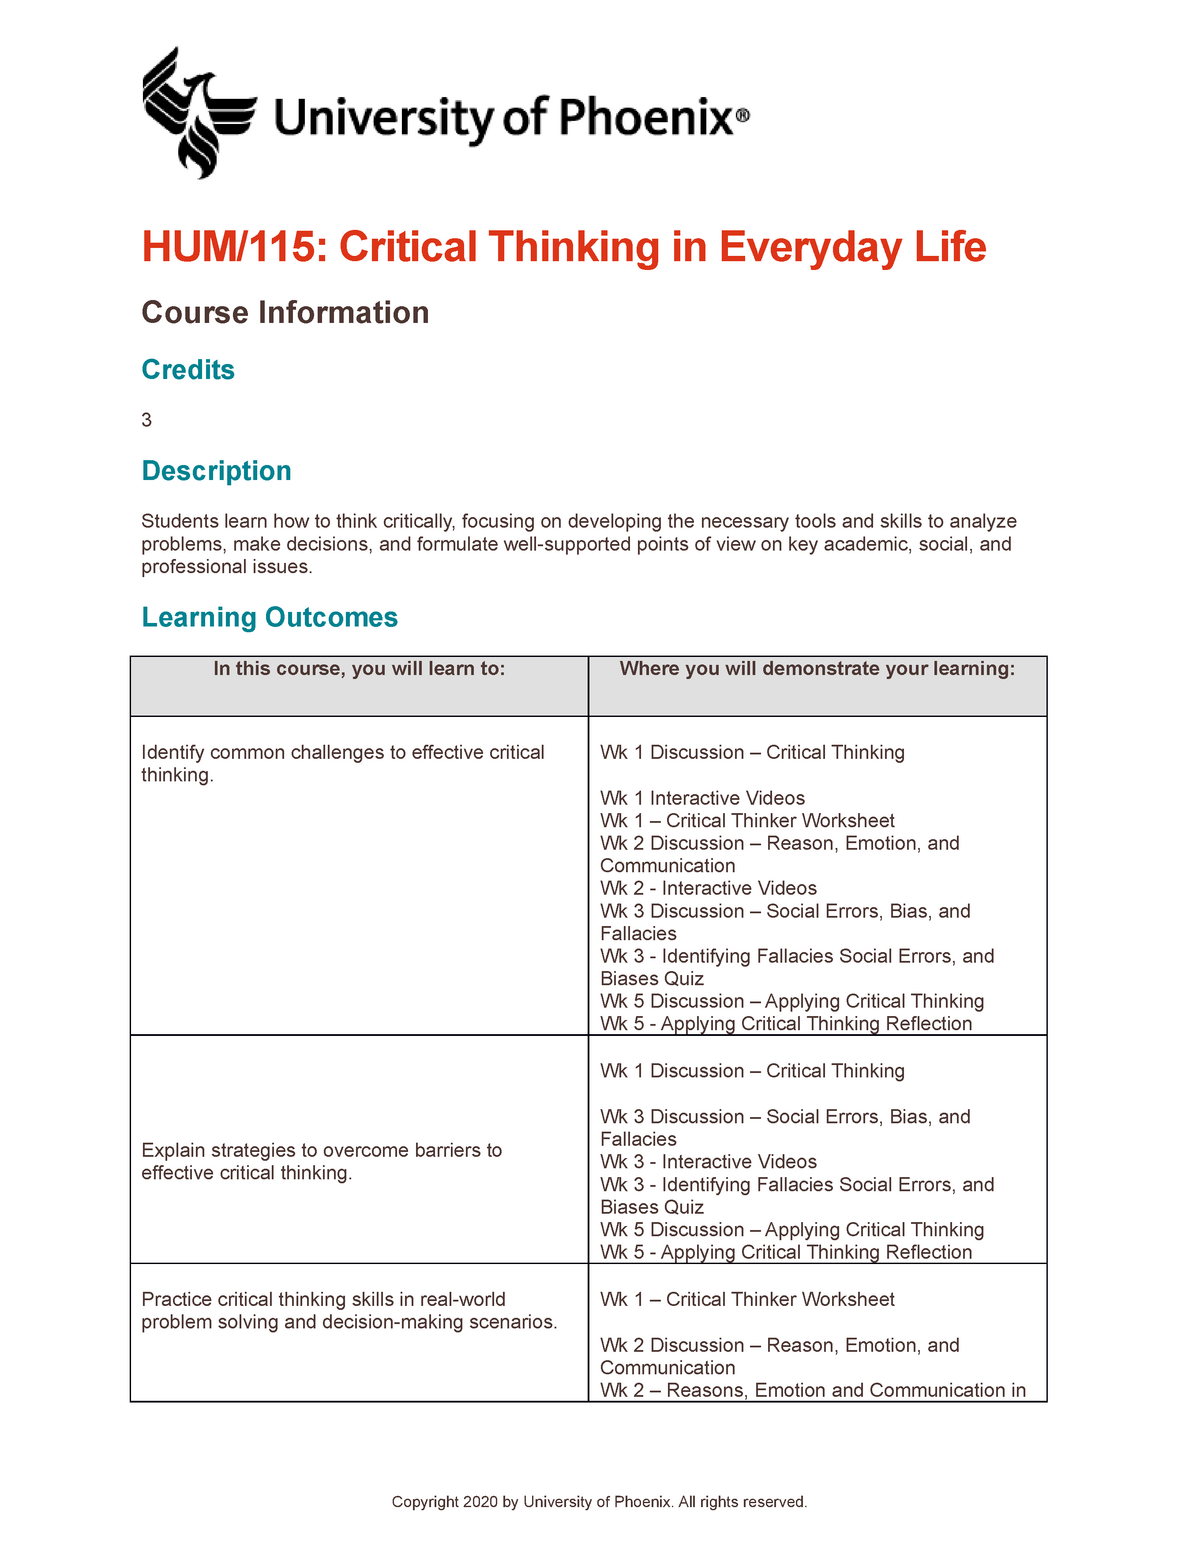 hum 115 critical thinking scenario week 5